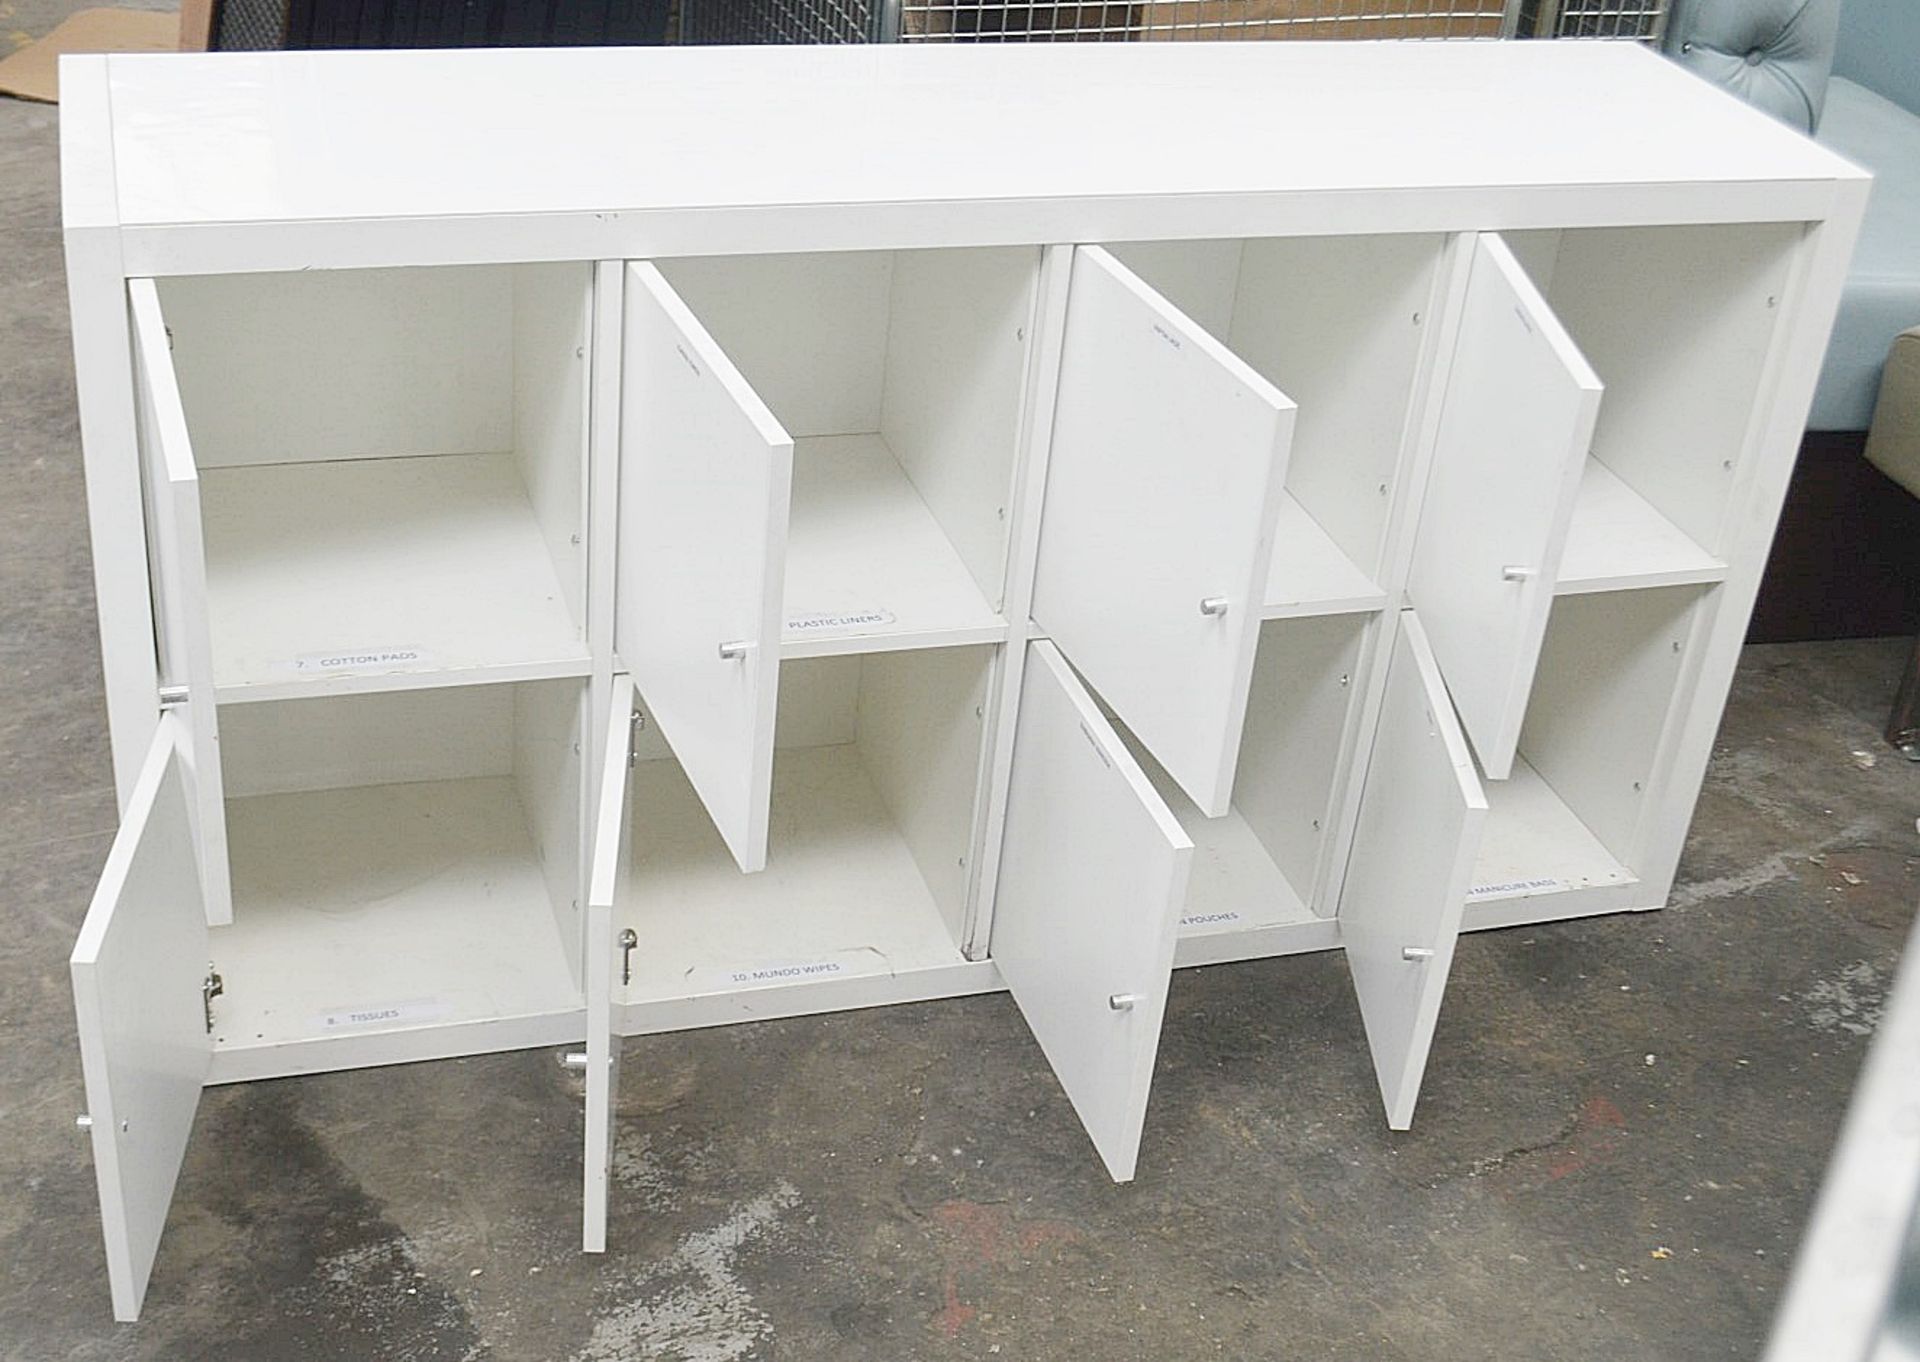 1 x 8-Door Salon Storage Unit In White - Dimensions: H77 x W146.5 x D38.7cm - Ref: MHB135 - - Image 4 of 4